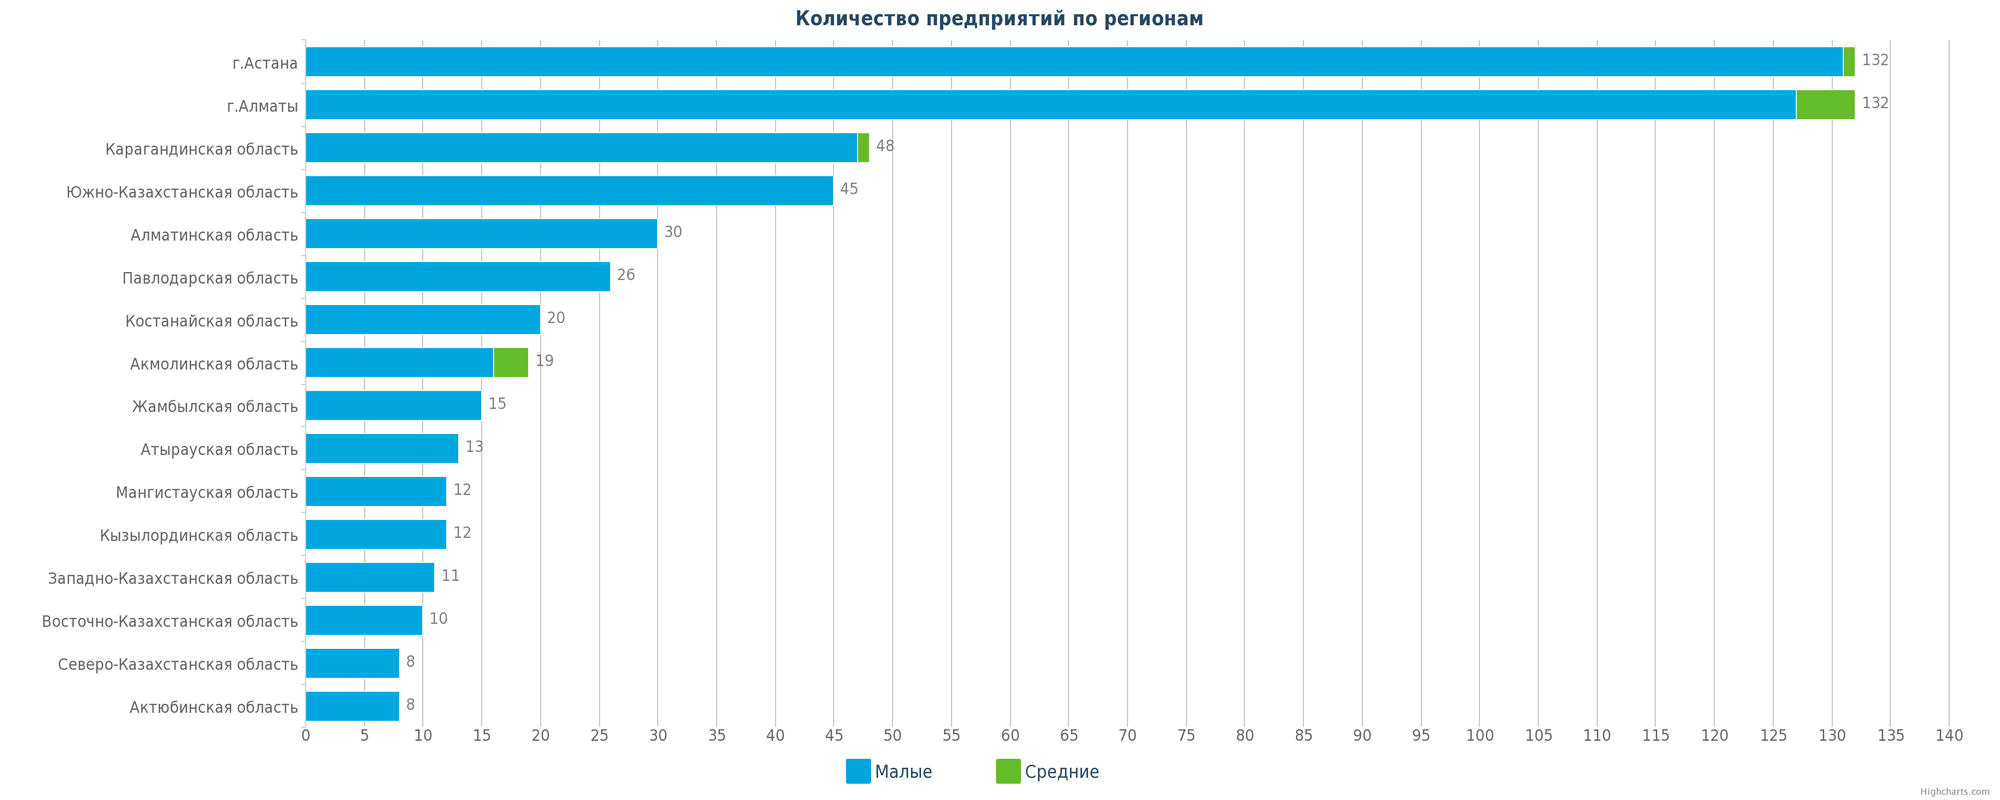 Количество новых предприятий в базе по регионам Казахстана